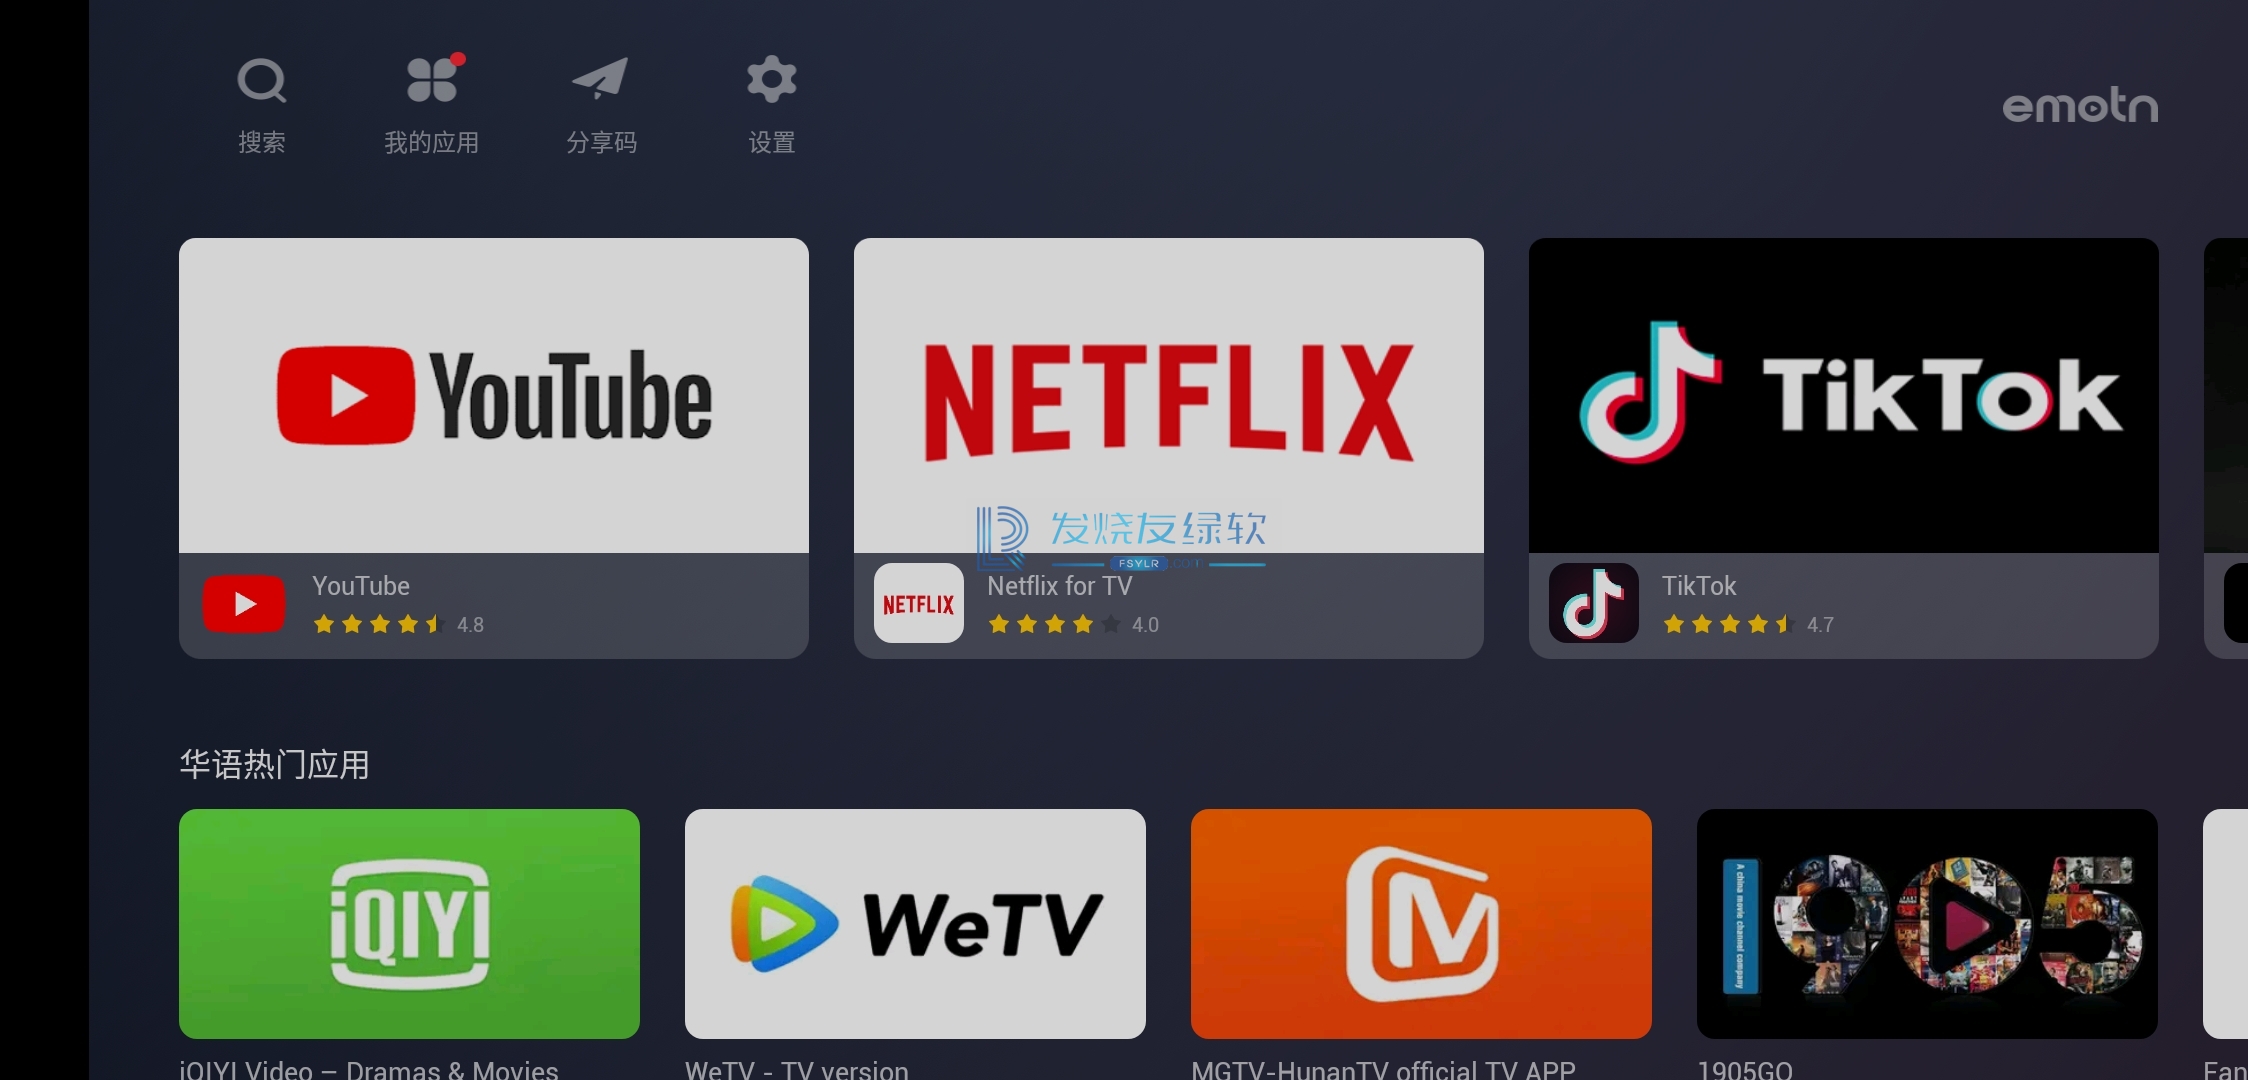 Emotn Store v1.0.40 | 免费全球TV软件市场[TV、盒子、安卓]